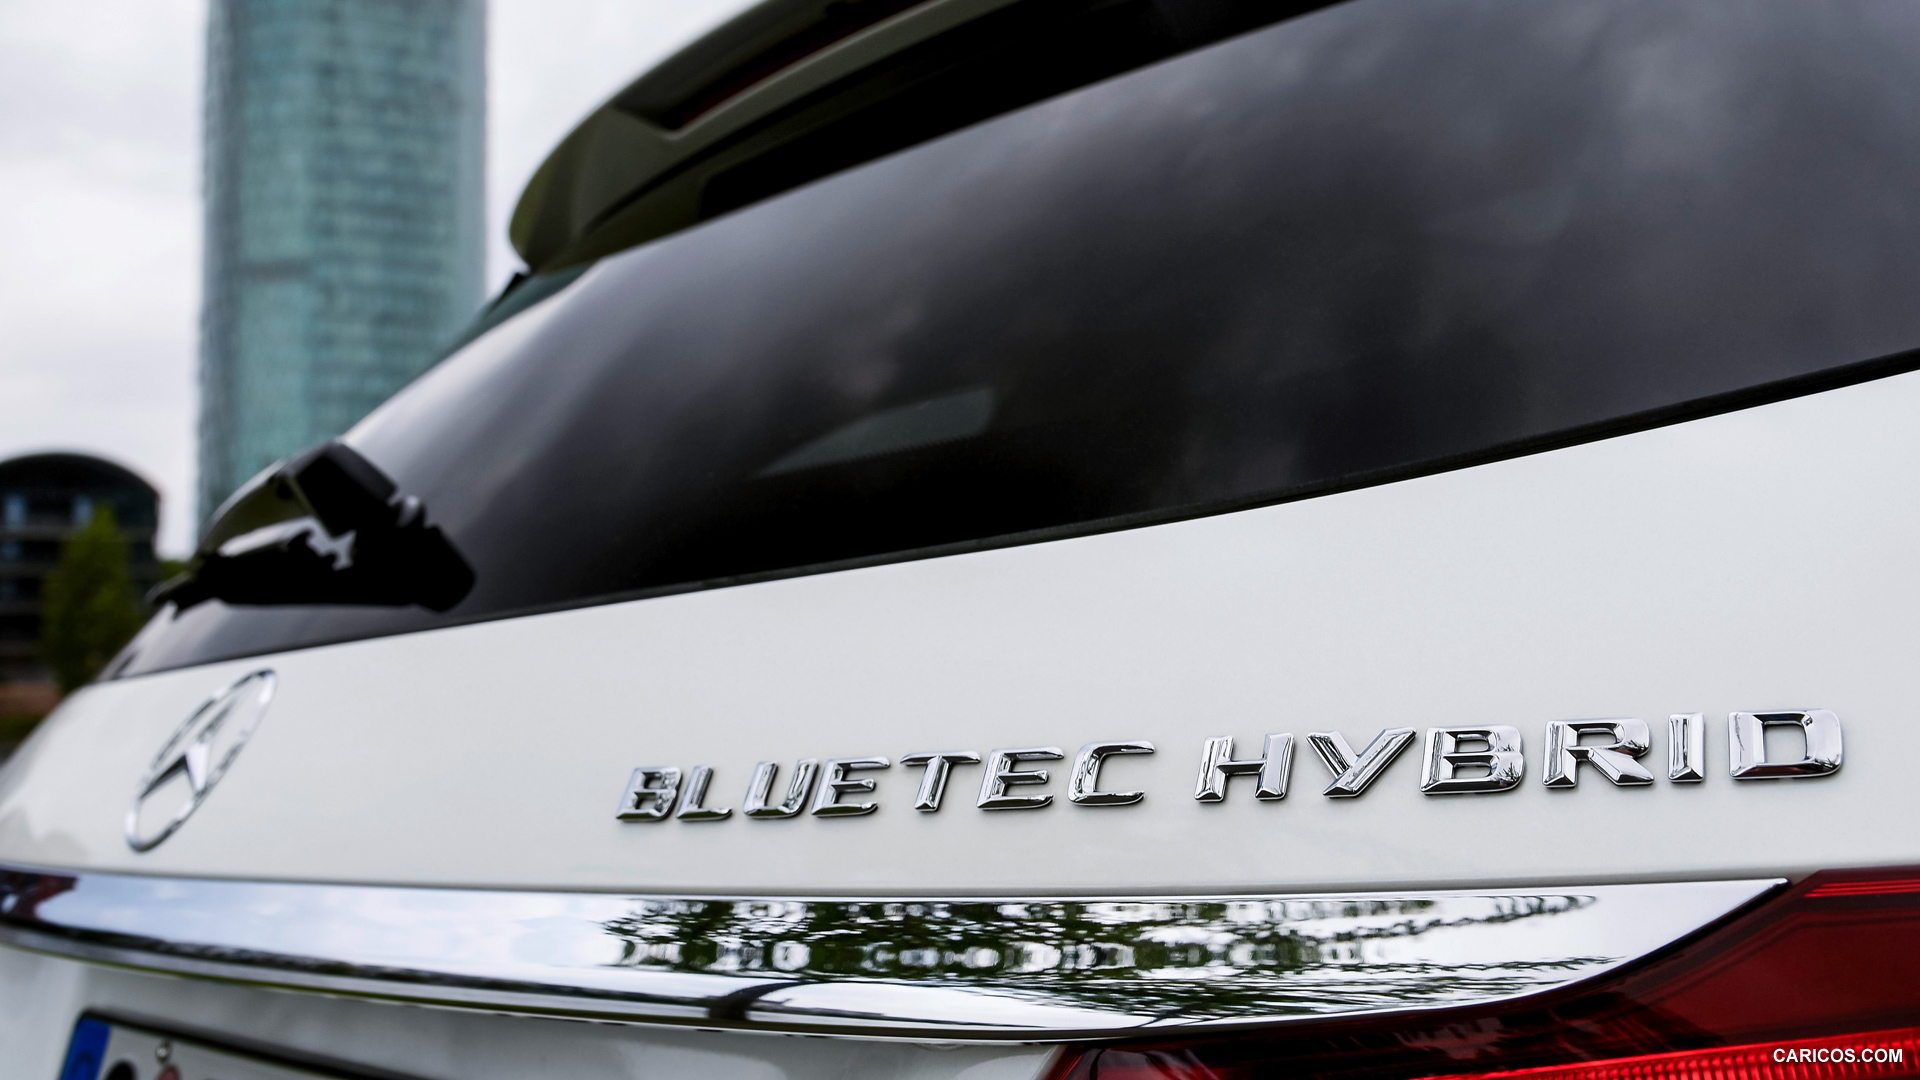 2015 Mercedes-Benz C-Class C 300 BlueTEC HYBRID Estate (Avantgarde, Designo Diamond White) - Badge, #120 of 173